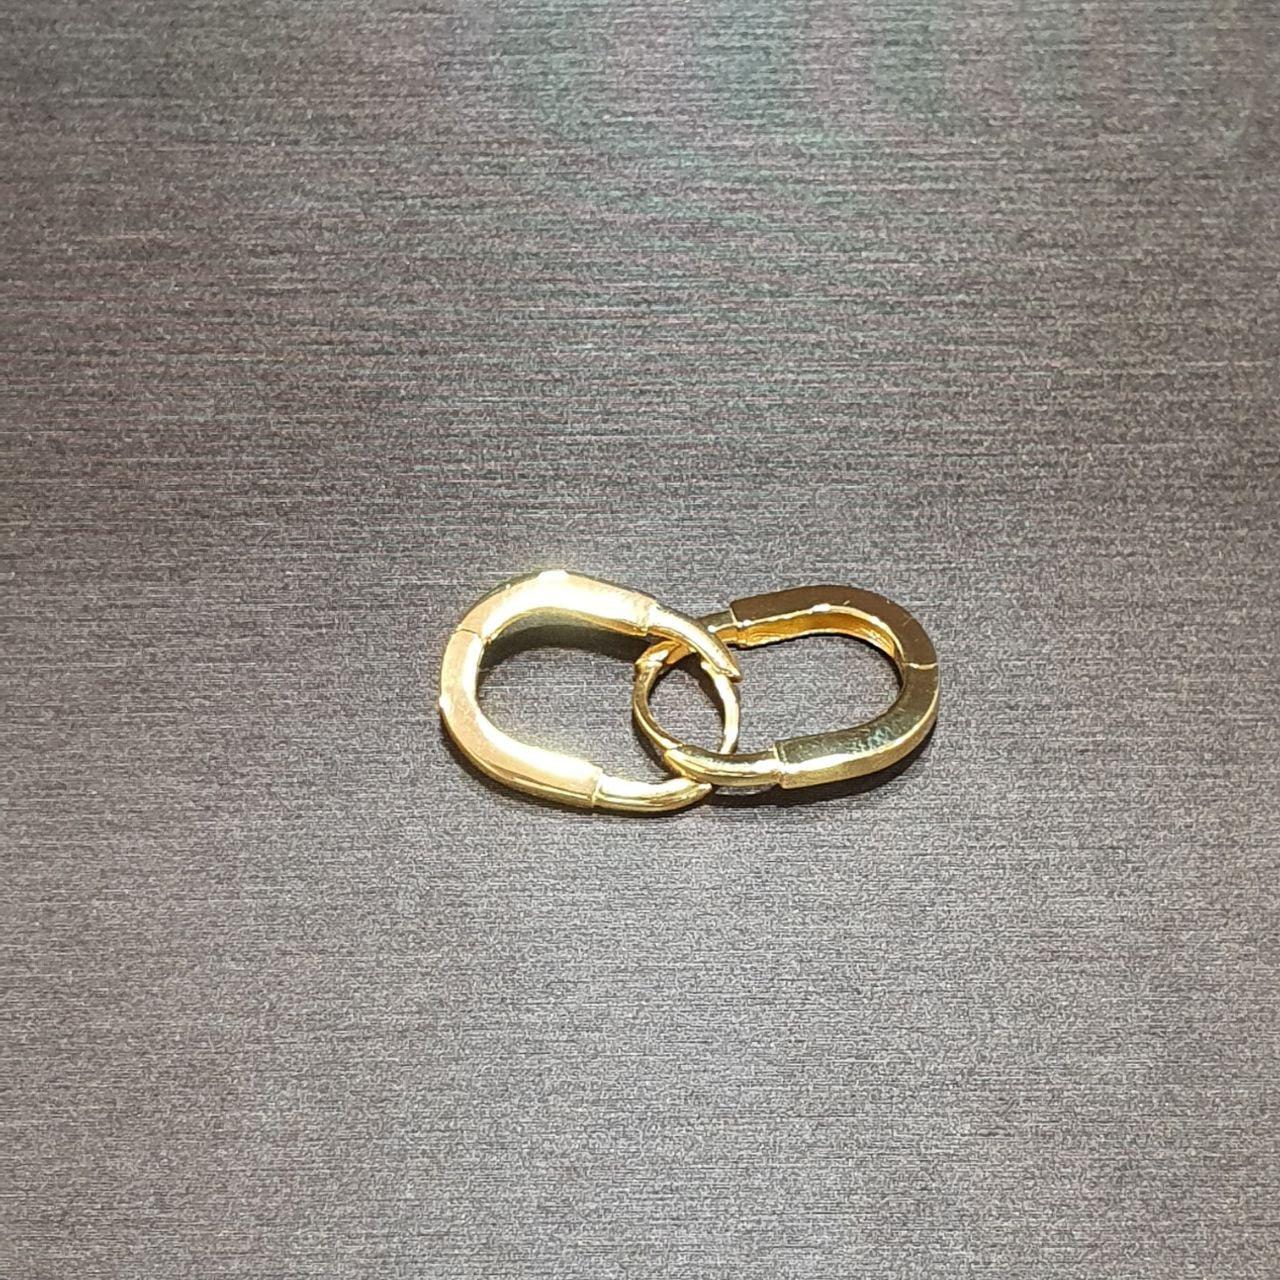 22K / 916 Gold T Design U Lock Earring-916 gold-Best Gold Shop